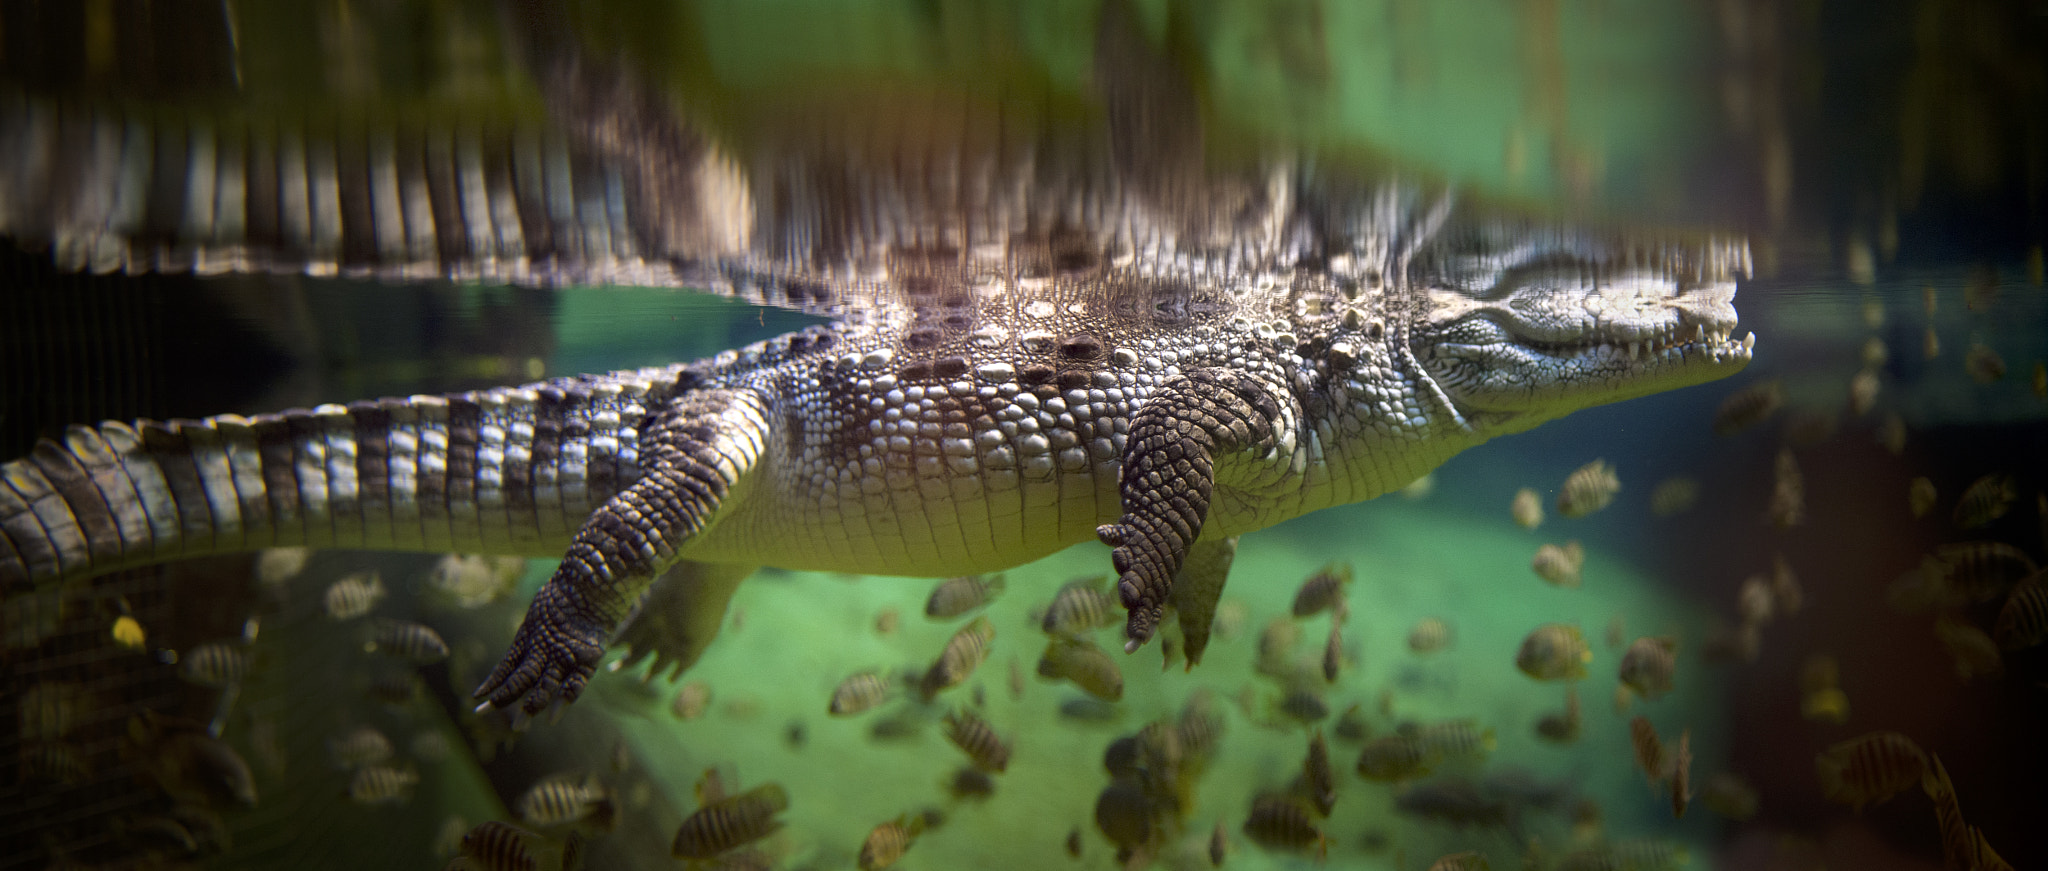 Underwater Alligators Animals Fish Crocodile 2048x871